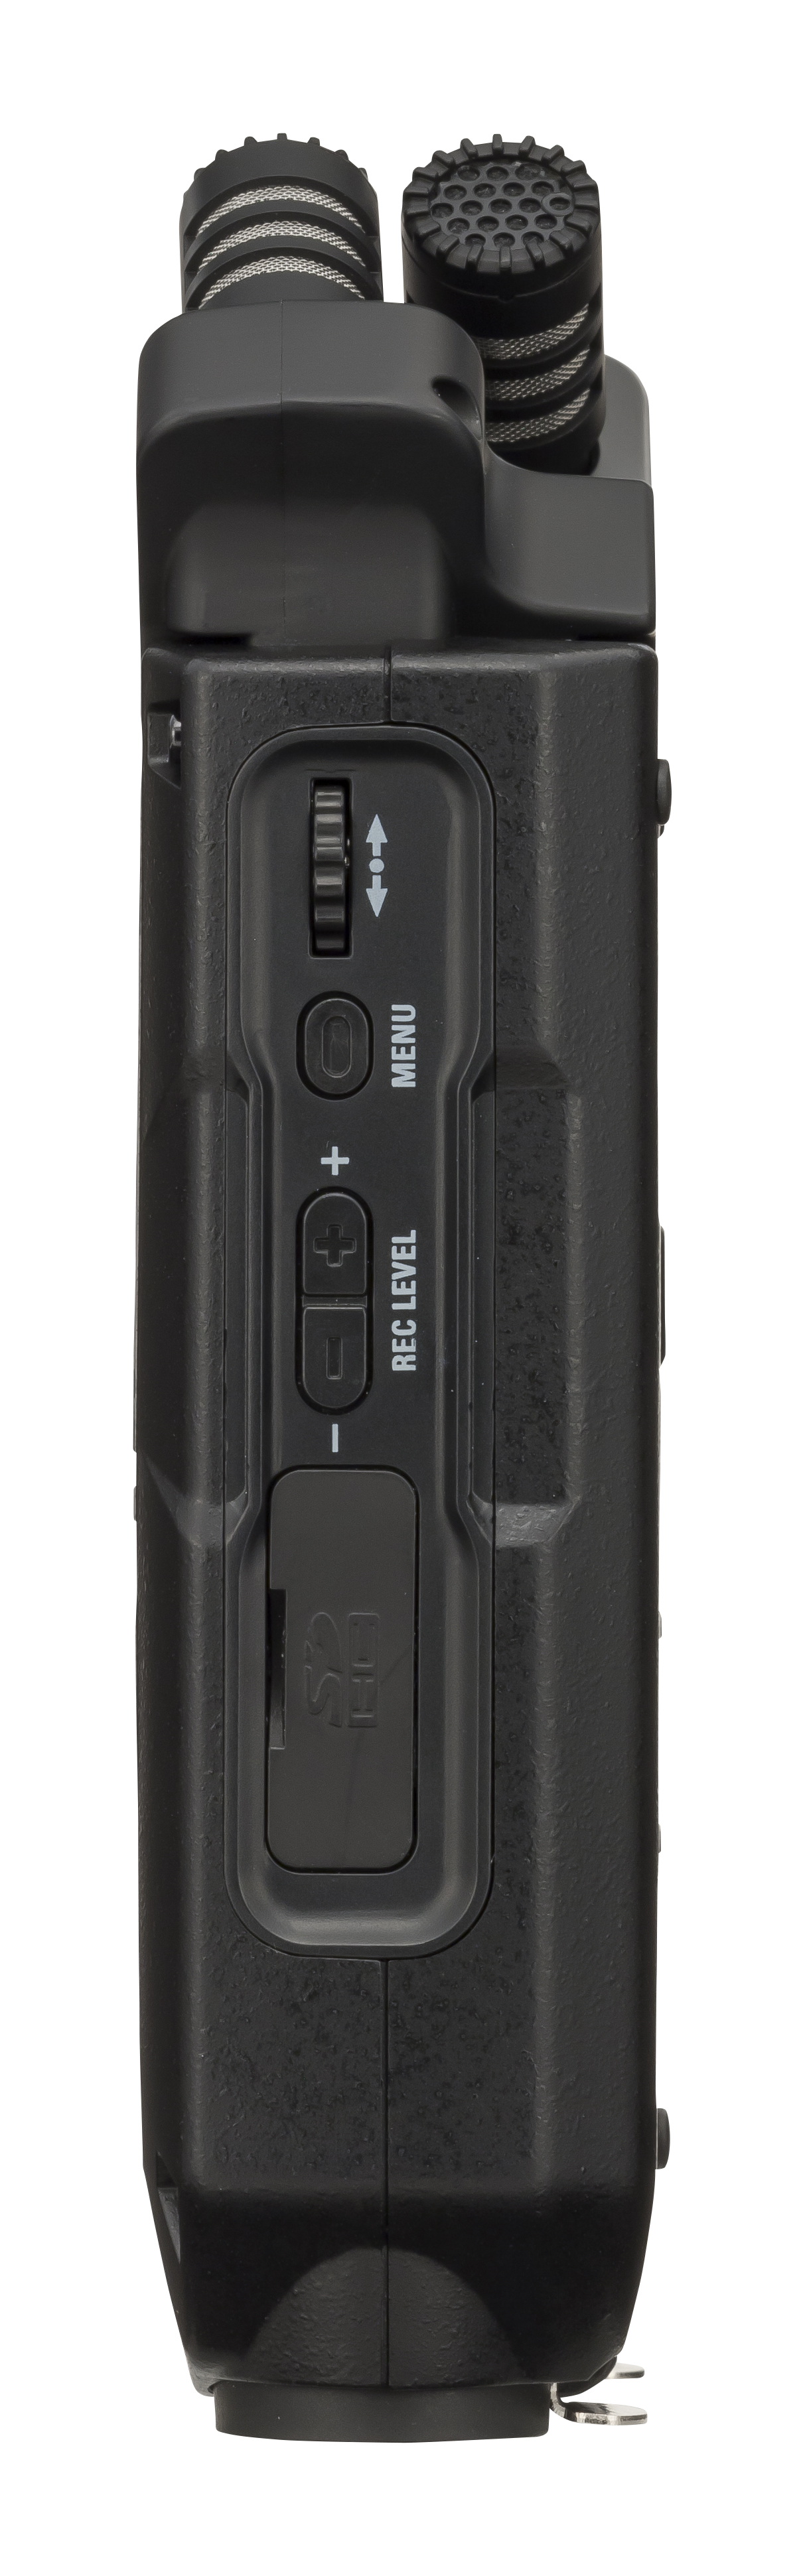 Zoom H4n Pro Black + Pack Accessoires - Enregistreur Portable - Variation 3